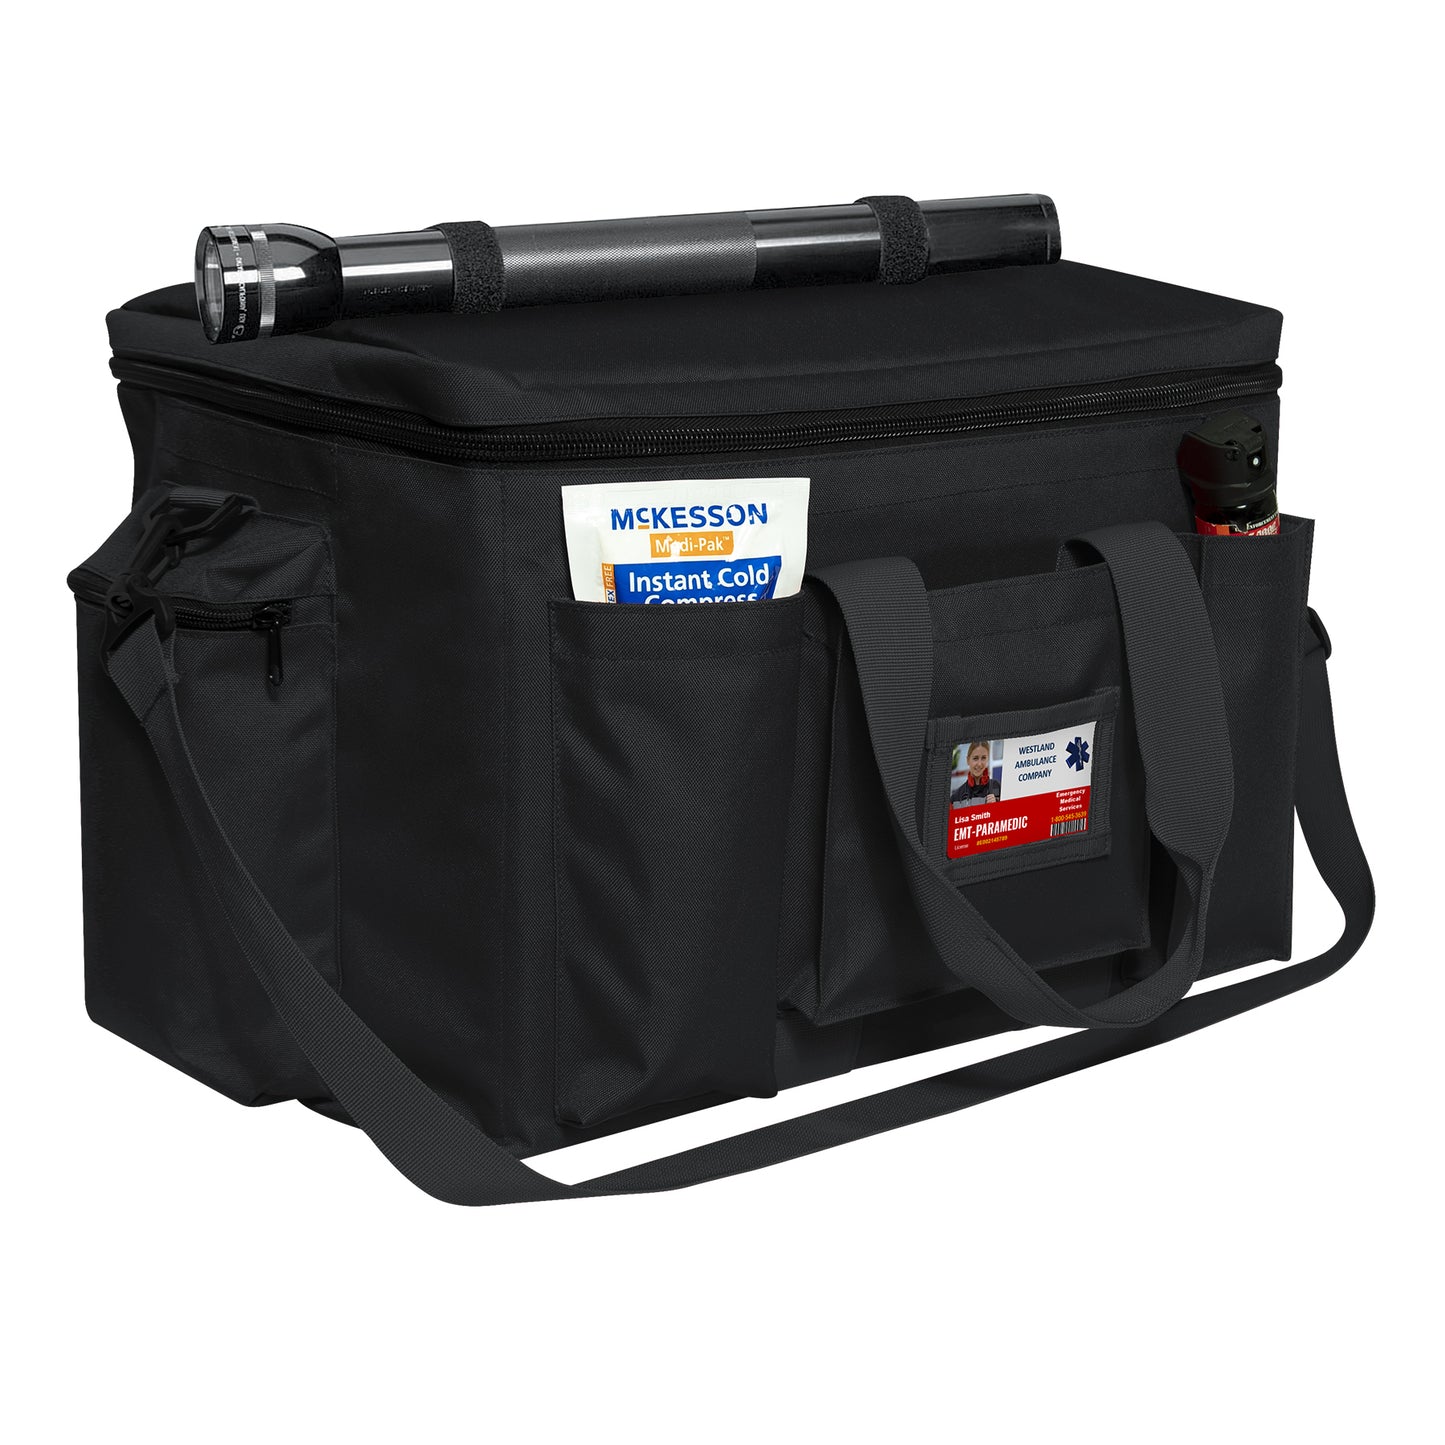 Law Enforcement Gear Bag 19x12x12.5 Equipment Duffle Bag